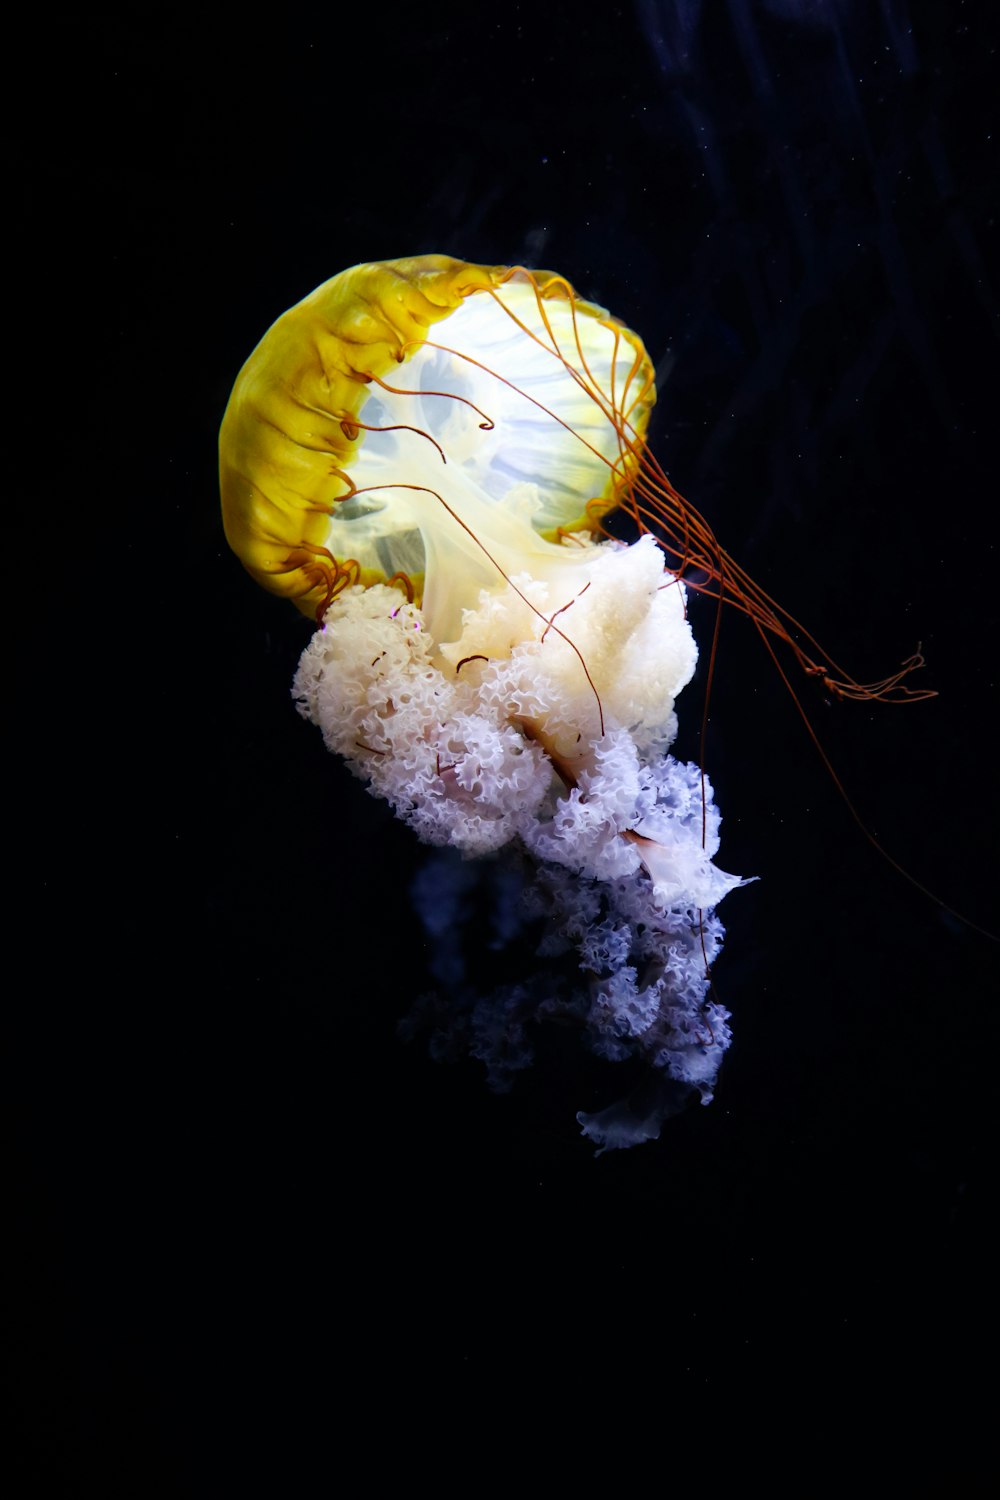 yellow and white jellyfish in water